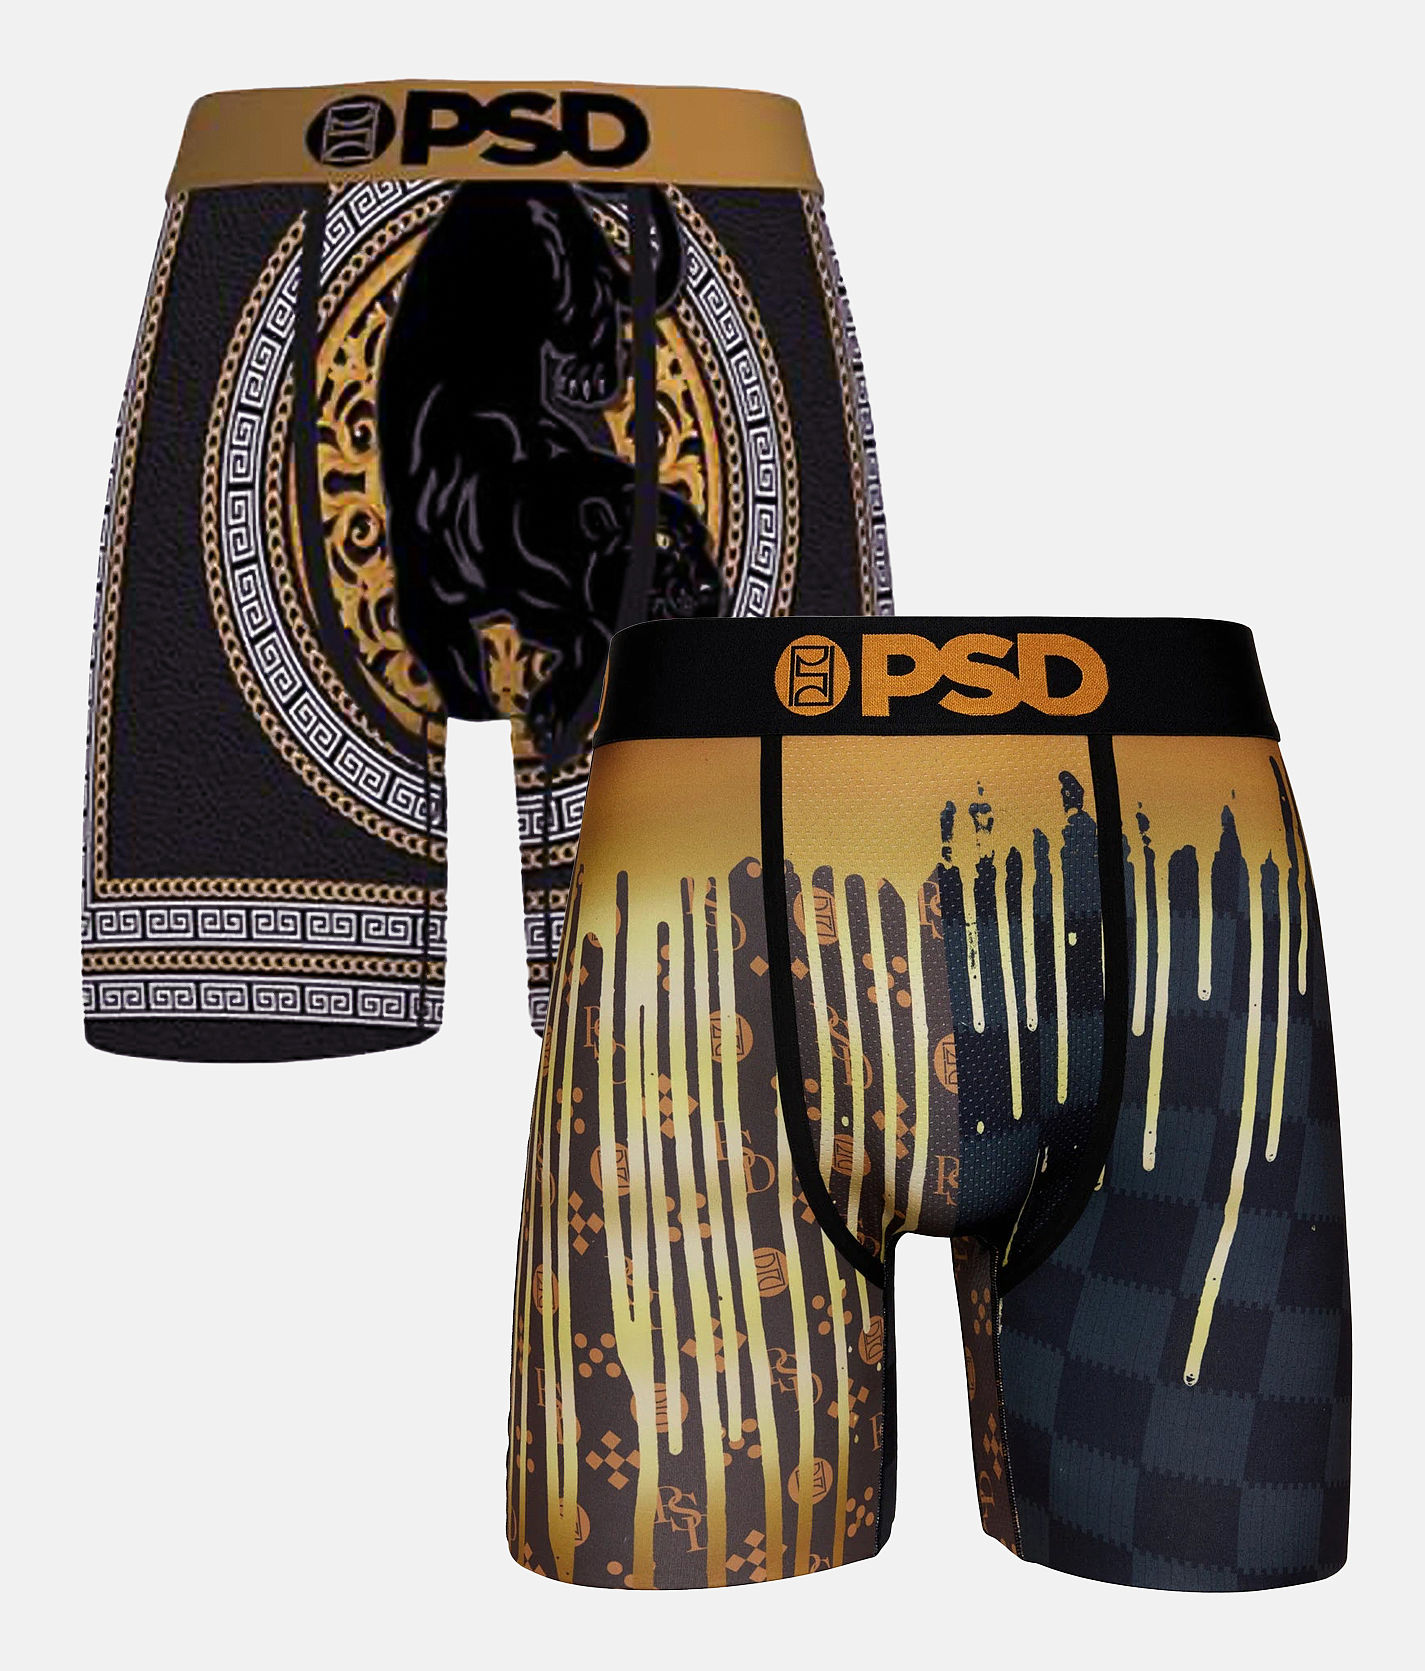 PSD Luxe Two Tone Stretch Boxer Briefs - Men's Boxers in Multi